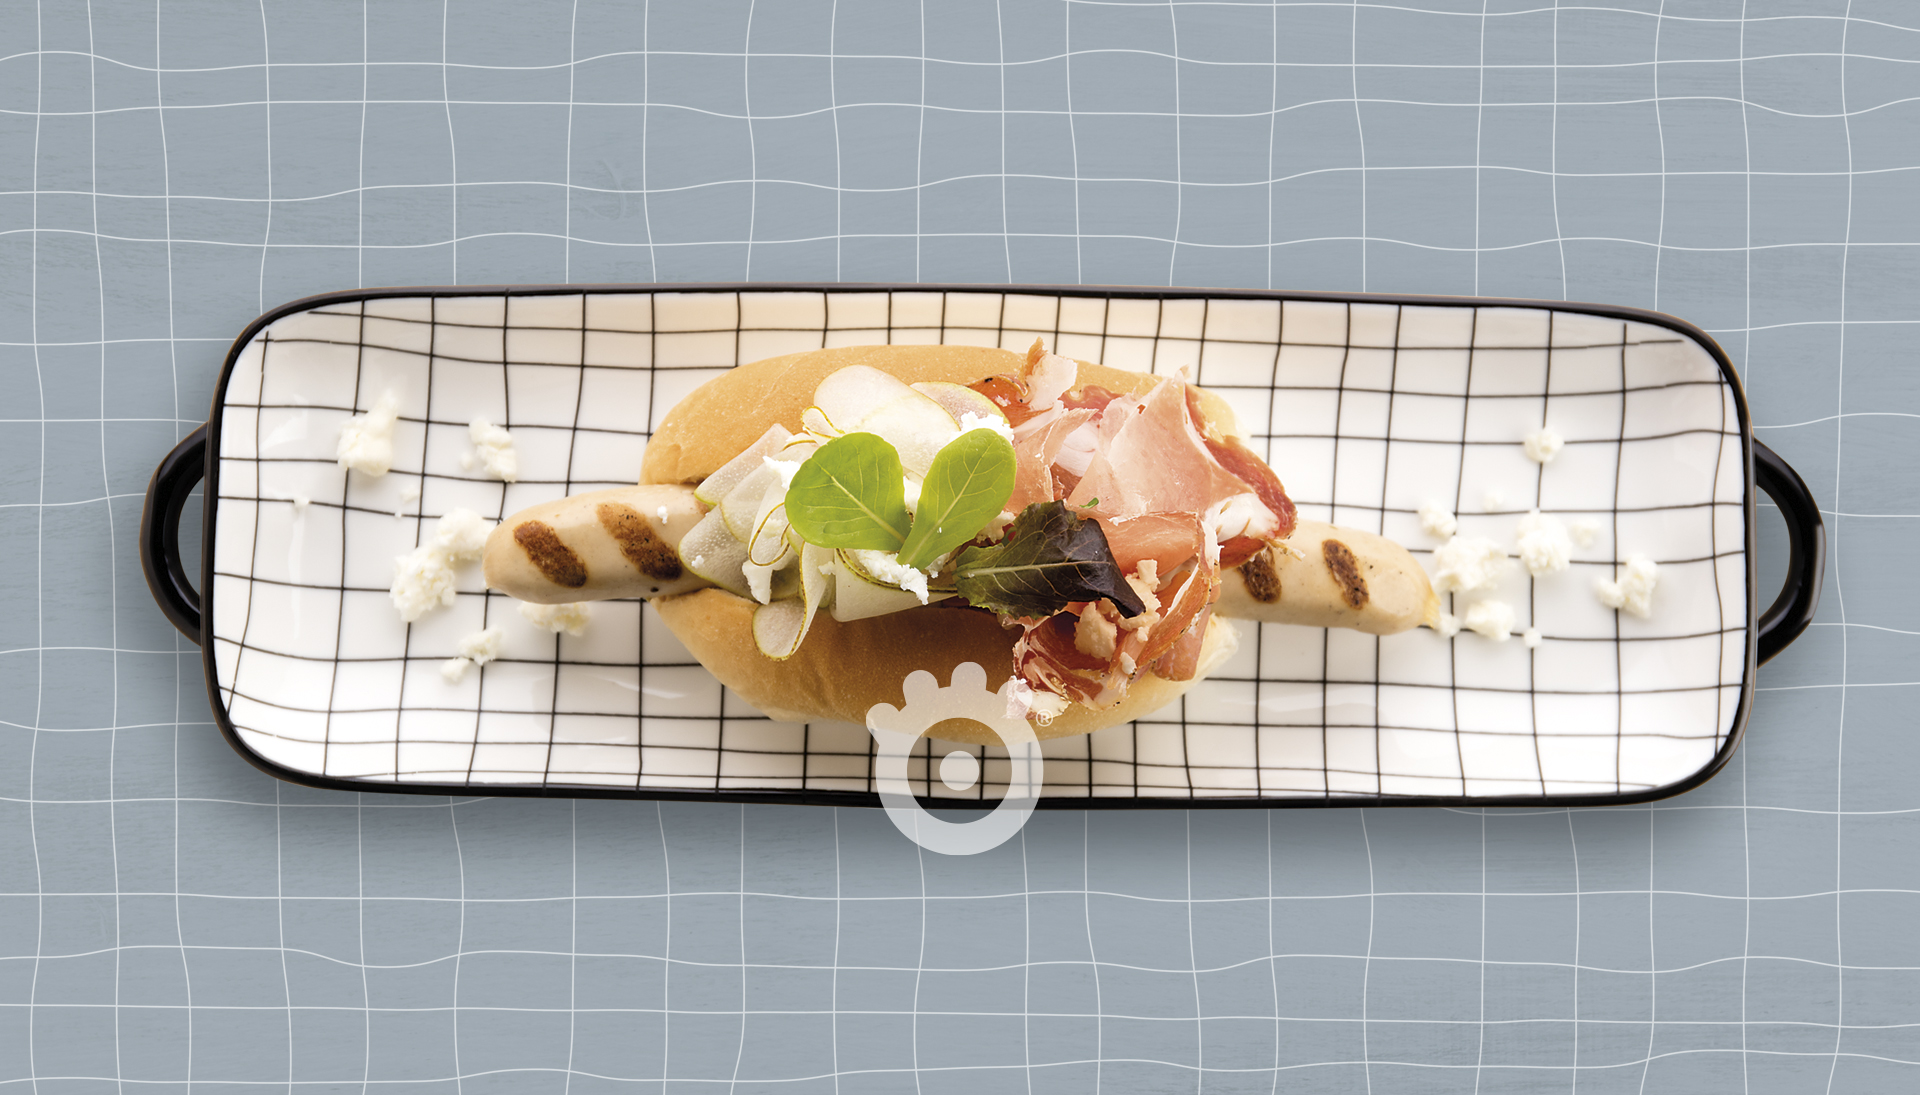 Panino con wurstel bianco - Food photography